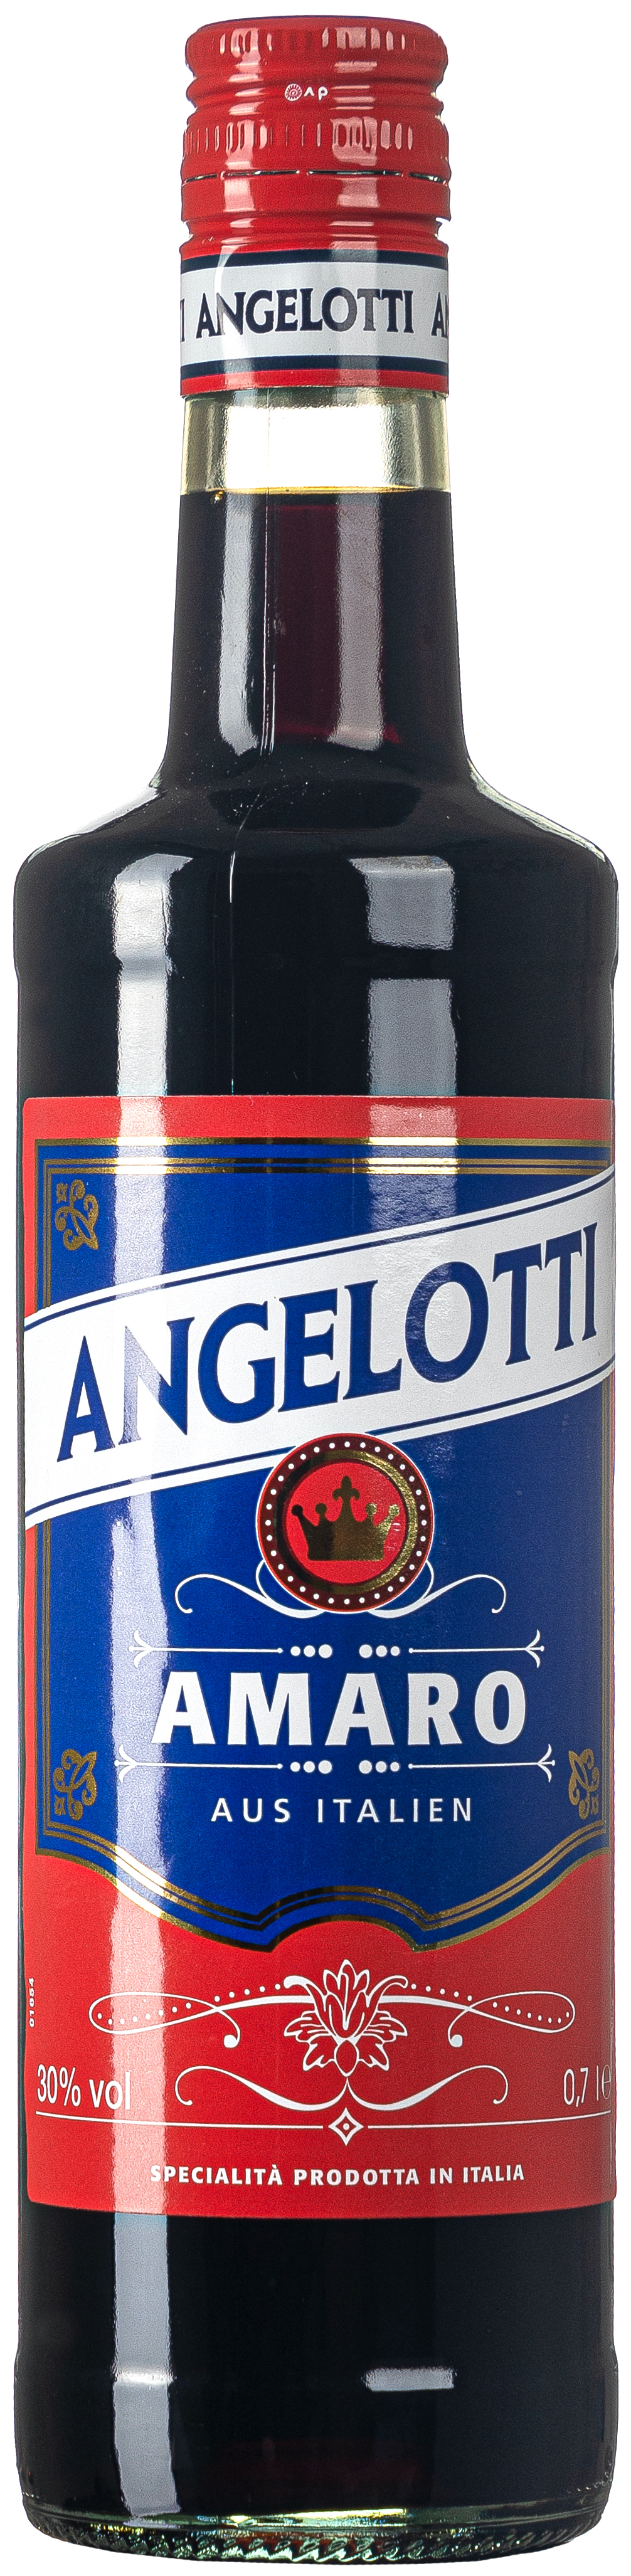 Angelotti Amaro italienischer Kräuterlikör 30% vol. 0,7L